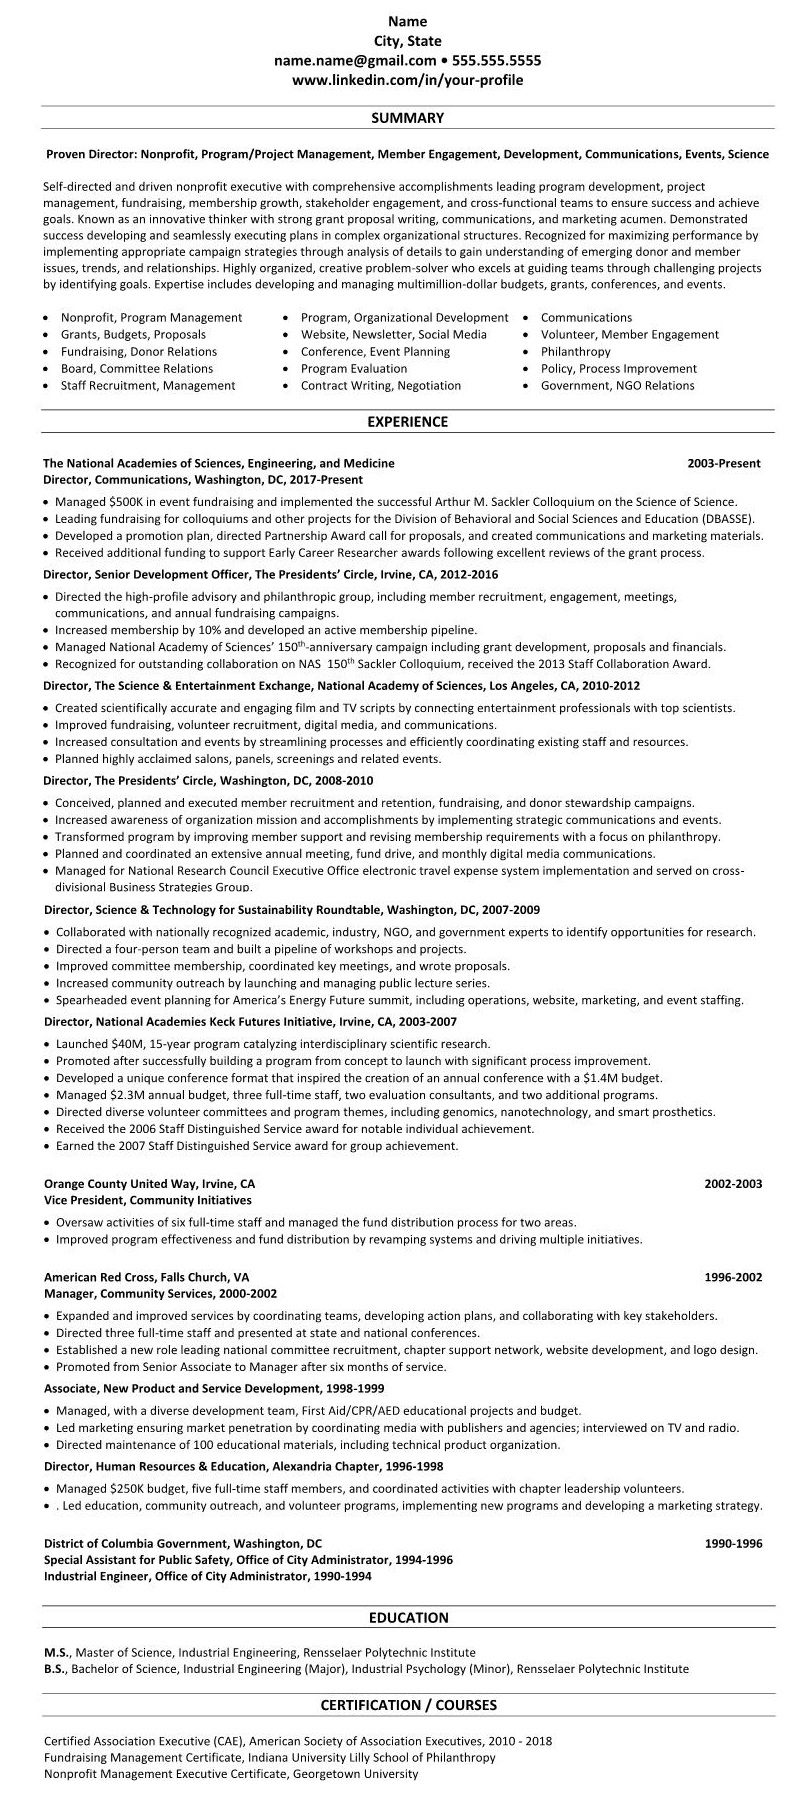 Resume 2132 resume example Nonprofit science 